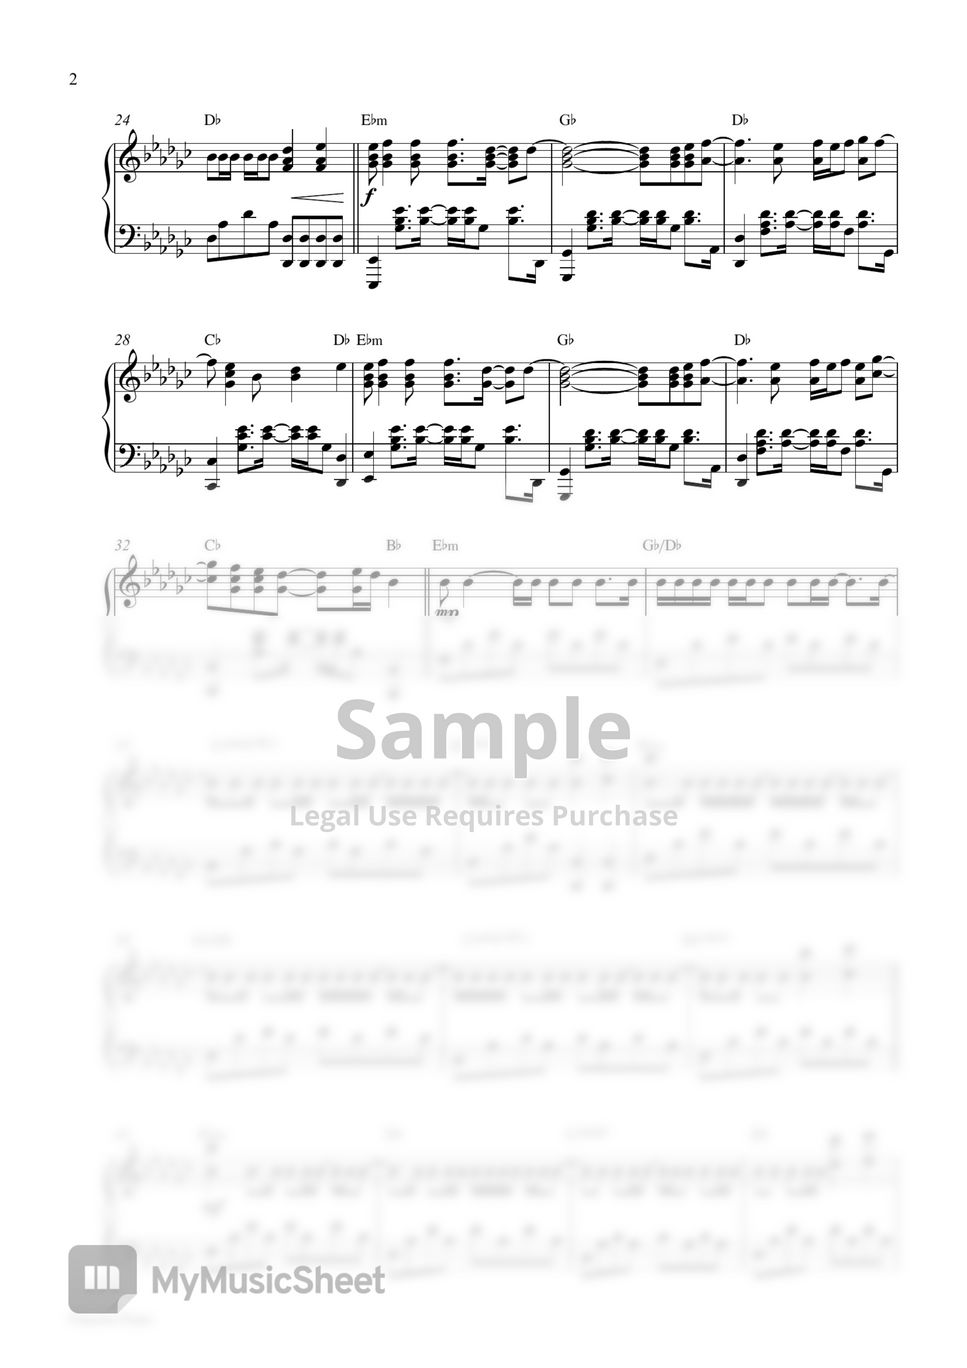 Linkin Park - In The End (2 PDF: Original Key Gb Major & G Major) by Pianella Piano